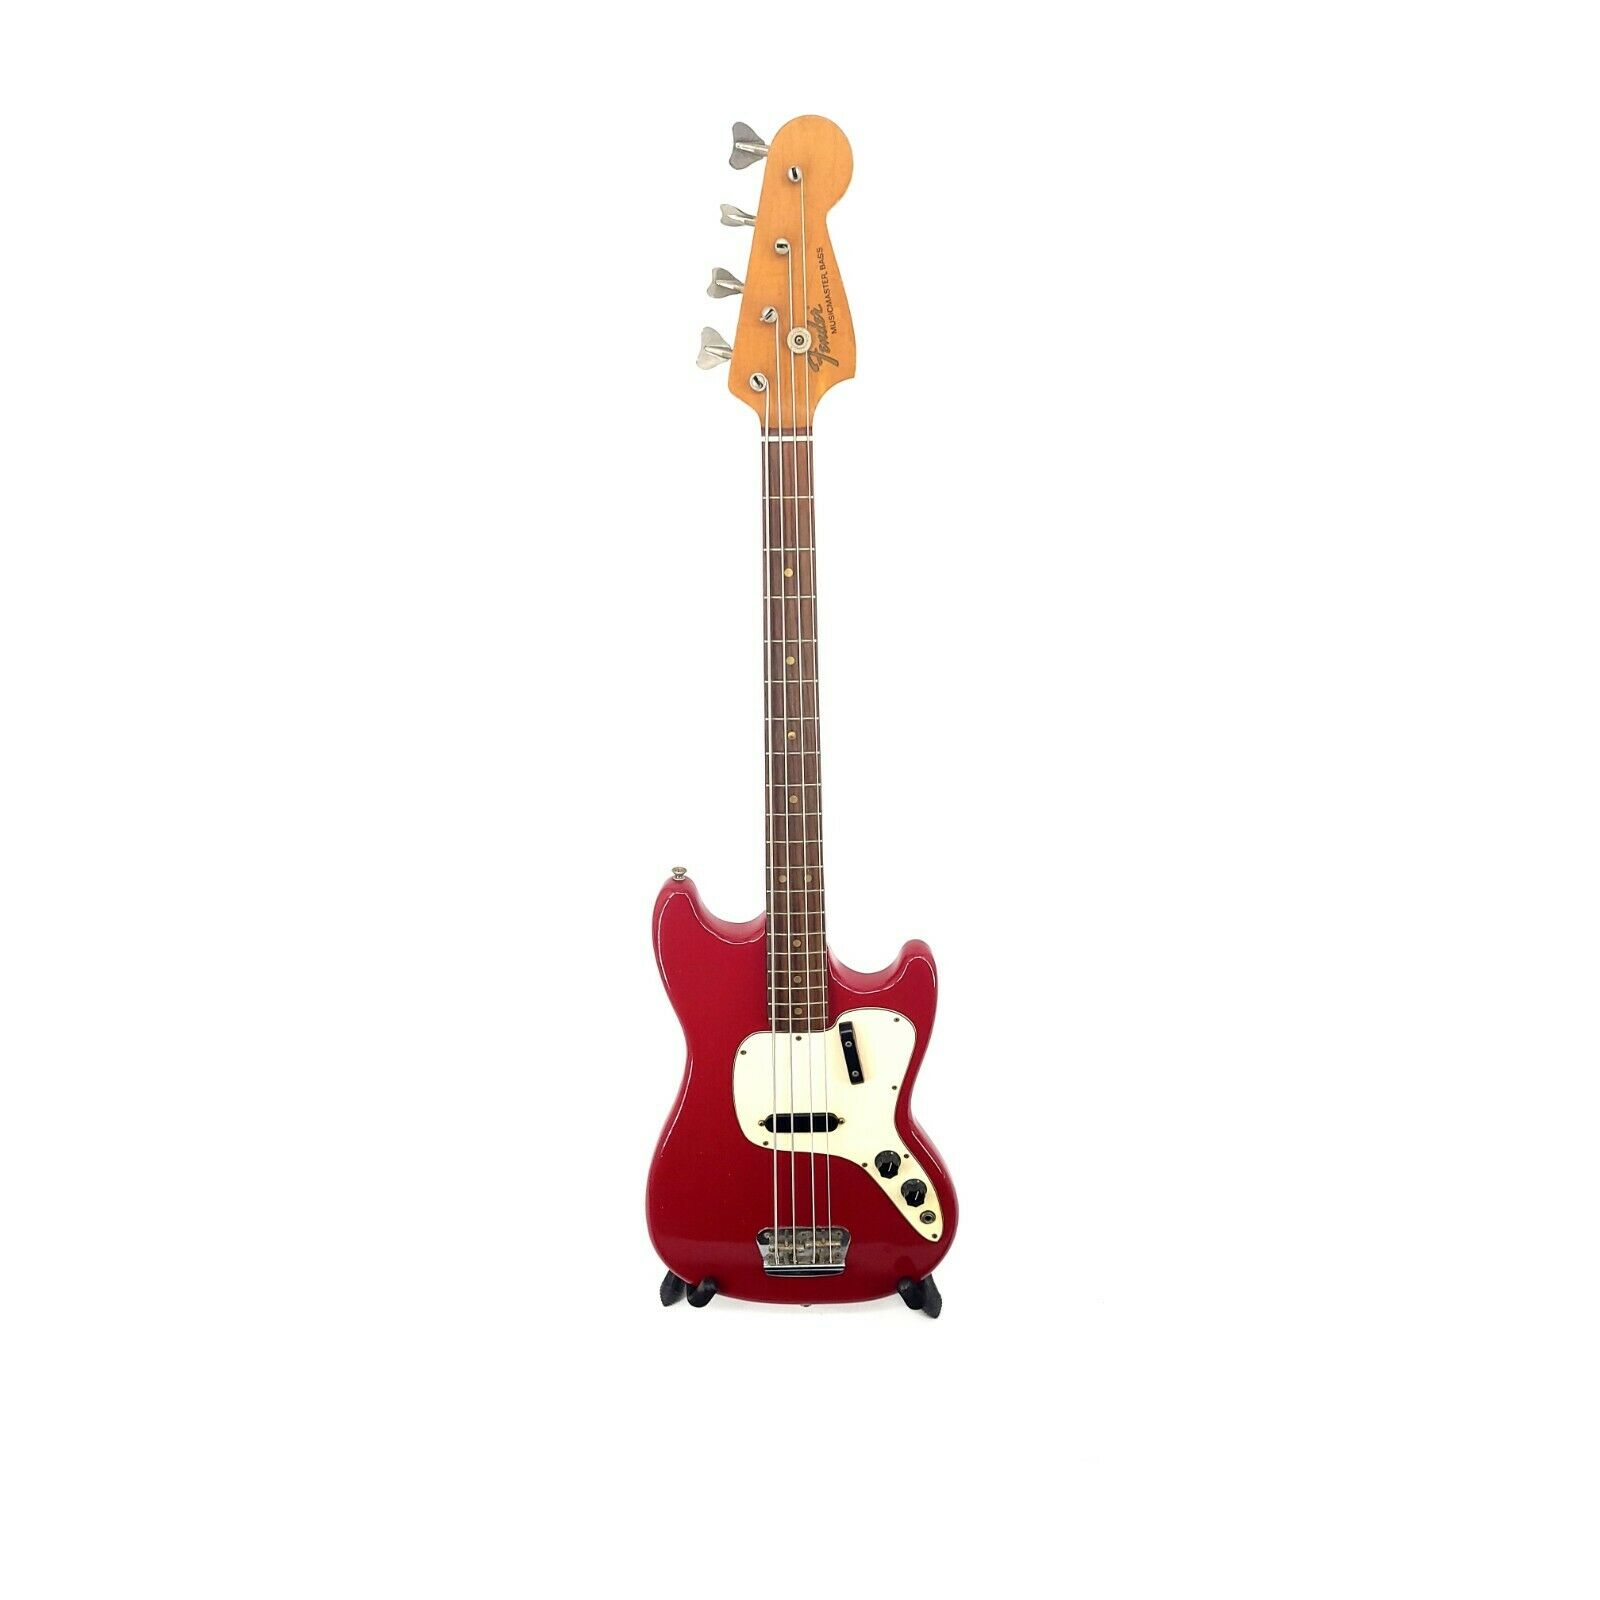 1969 Fender Musicmaster Bass Guitar With Original Case